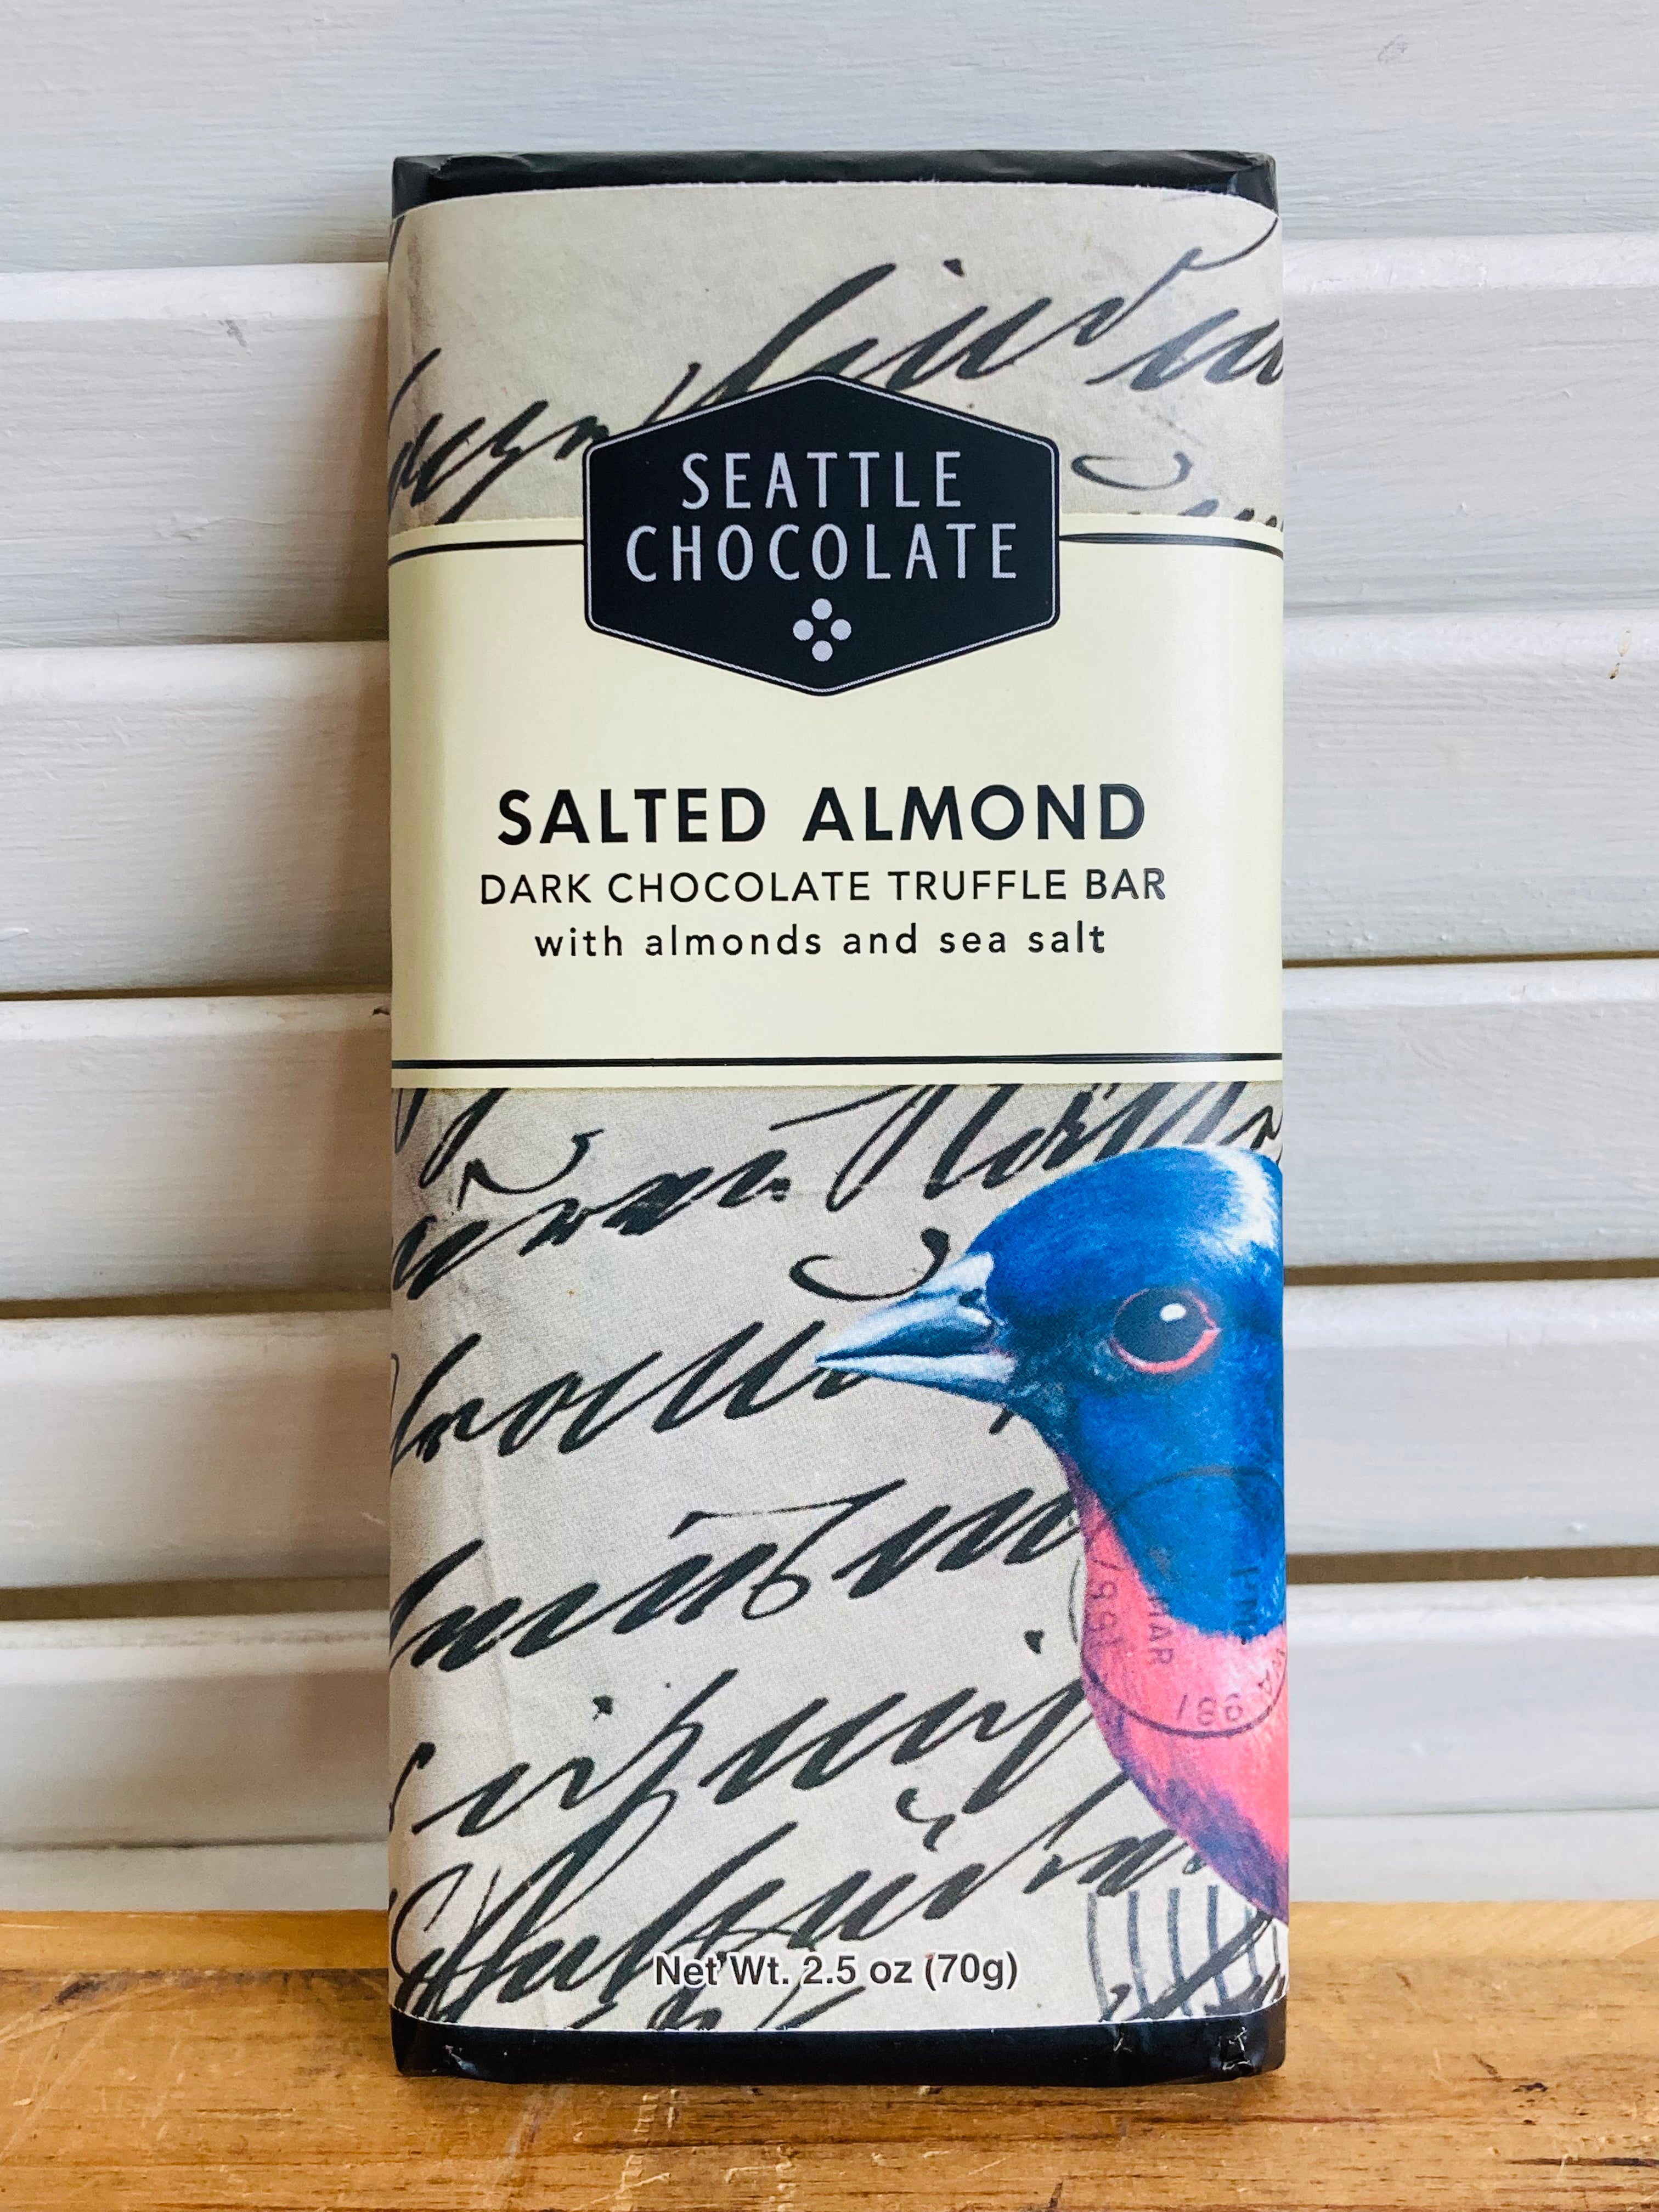 Salted Almond - Seattle Chocolate truffle bar